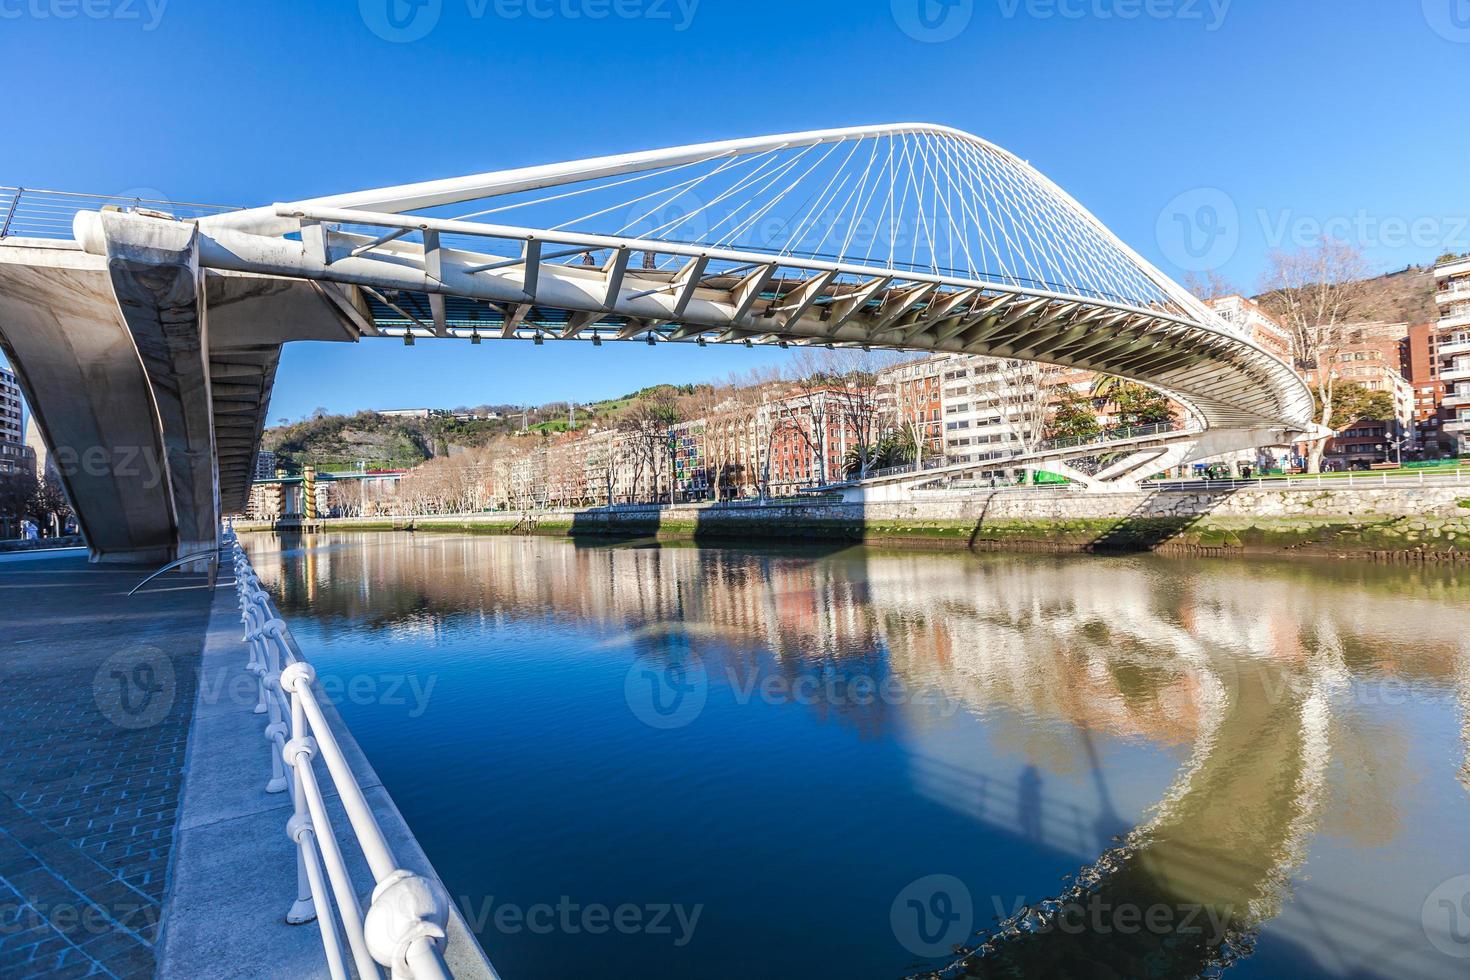 Zubizuri, the Campo Volantin Bridge, Bilbao, Spain photo